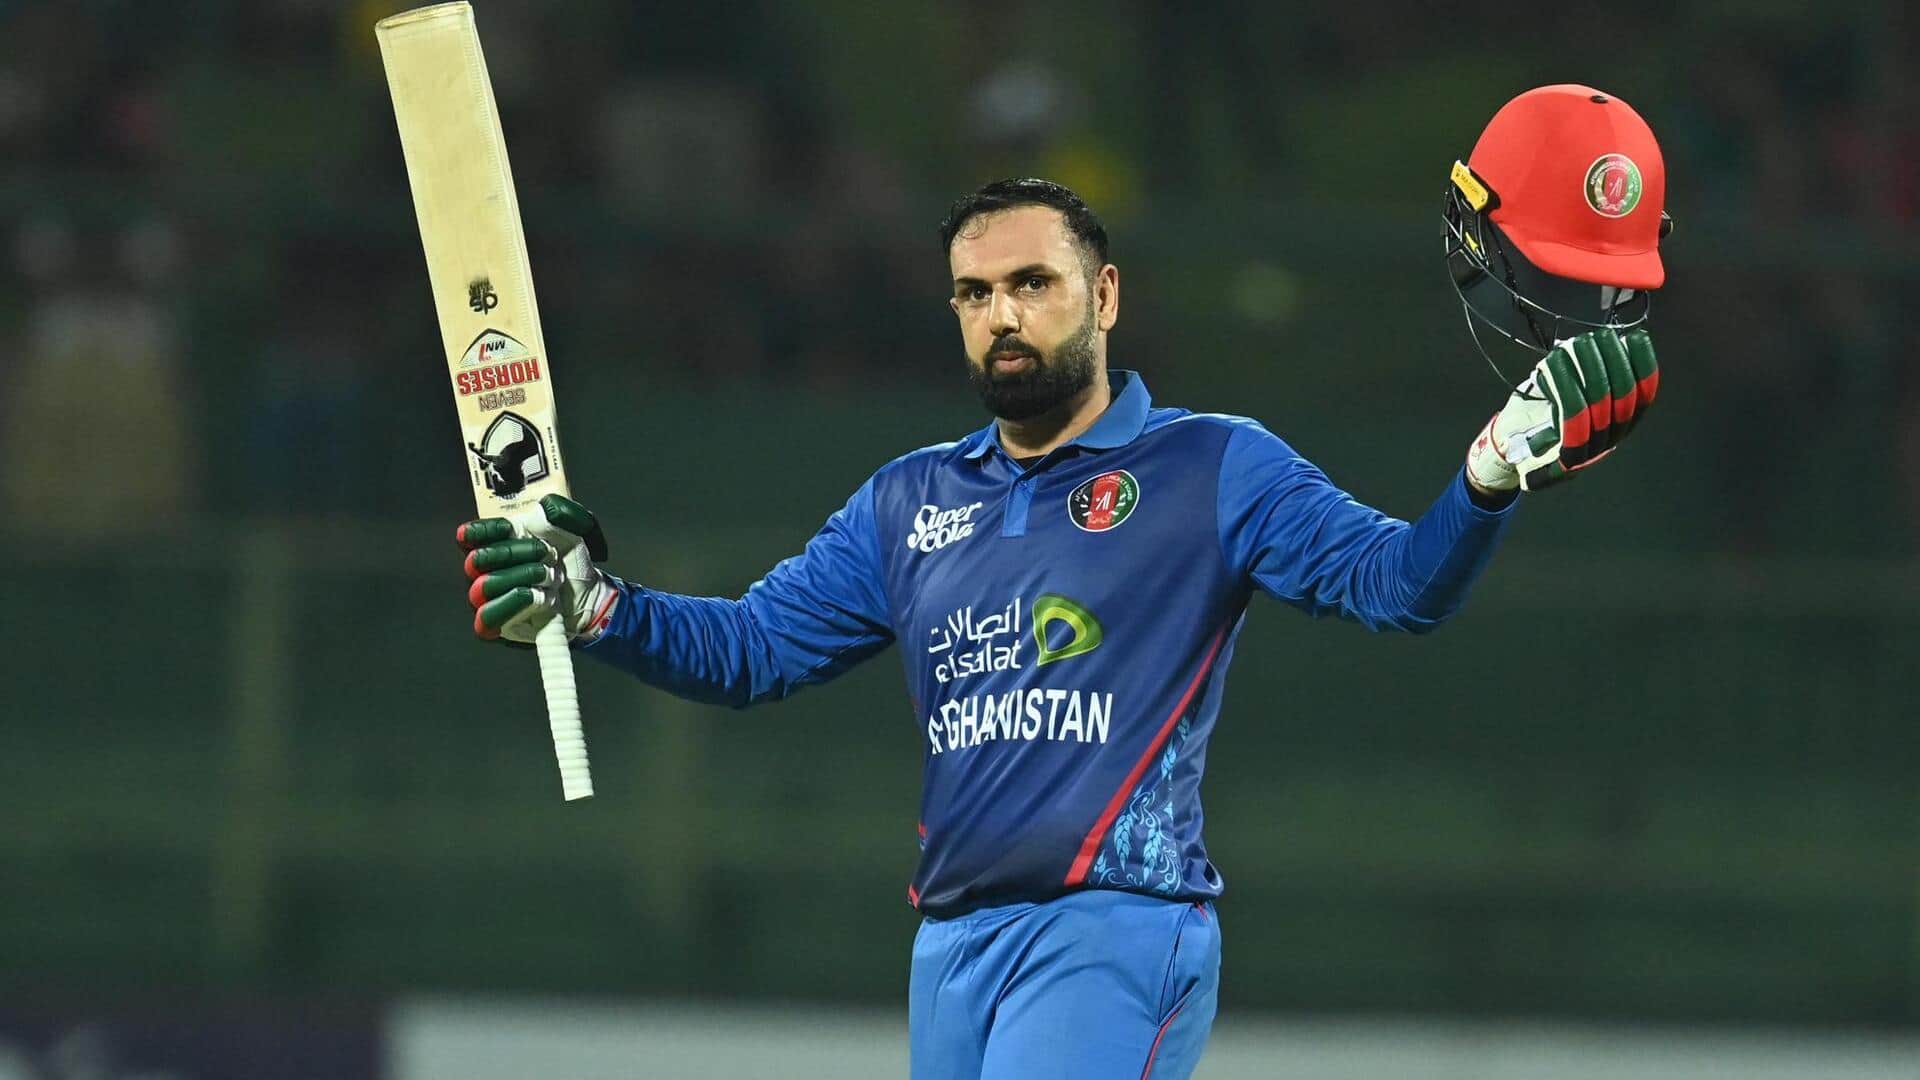 Afghanistan's Mohammad Nabi hammers second ODI century: Key stats